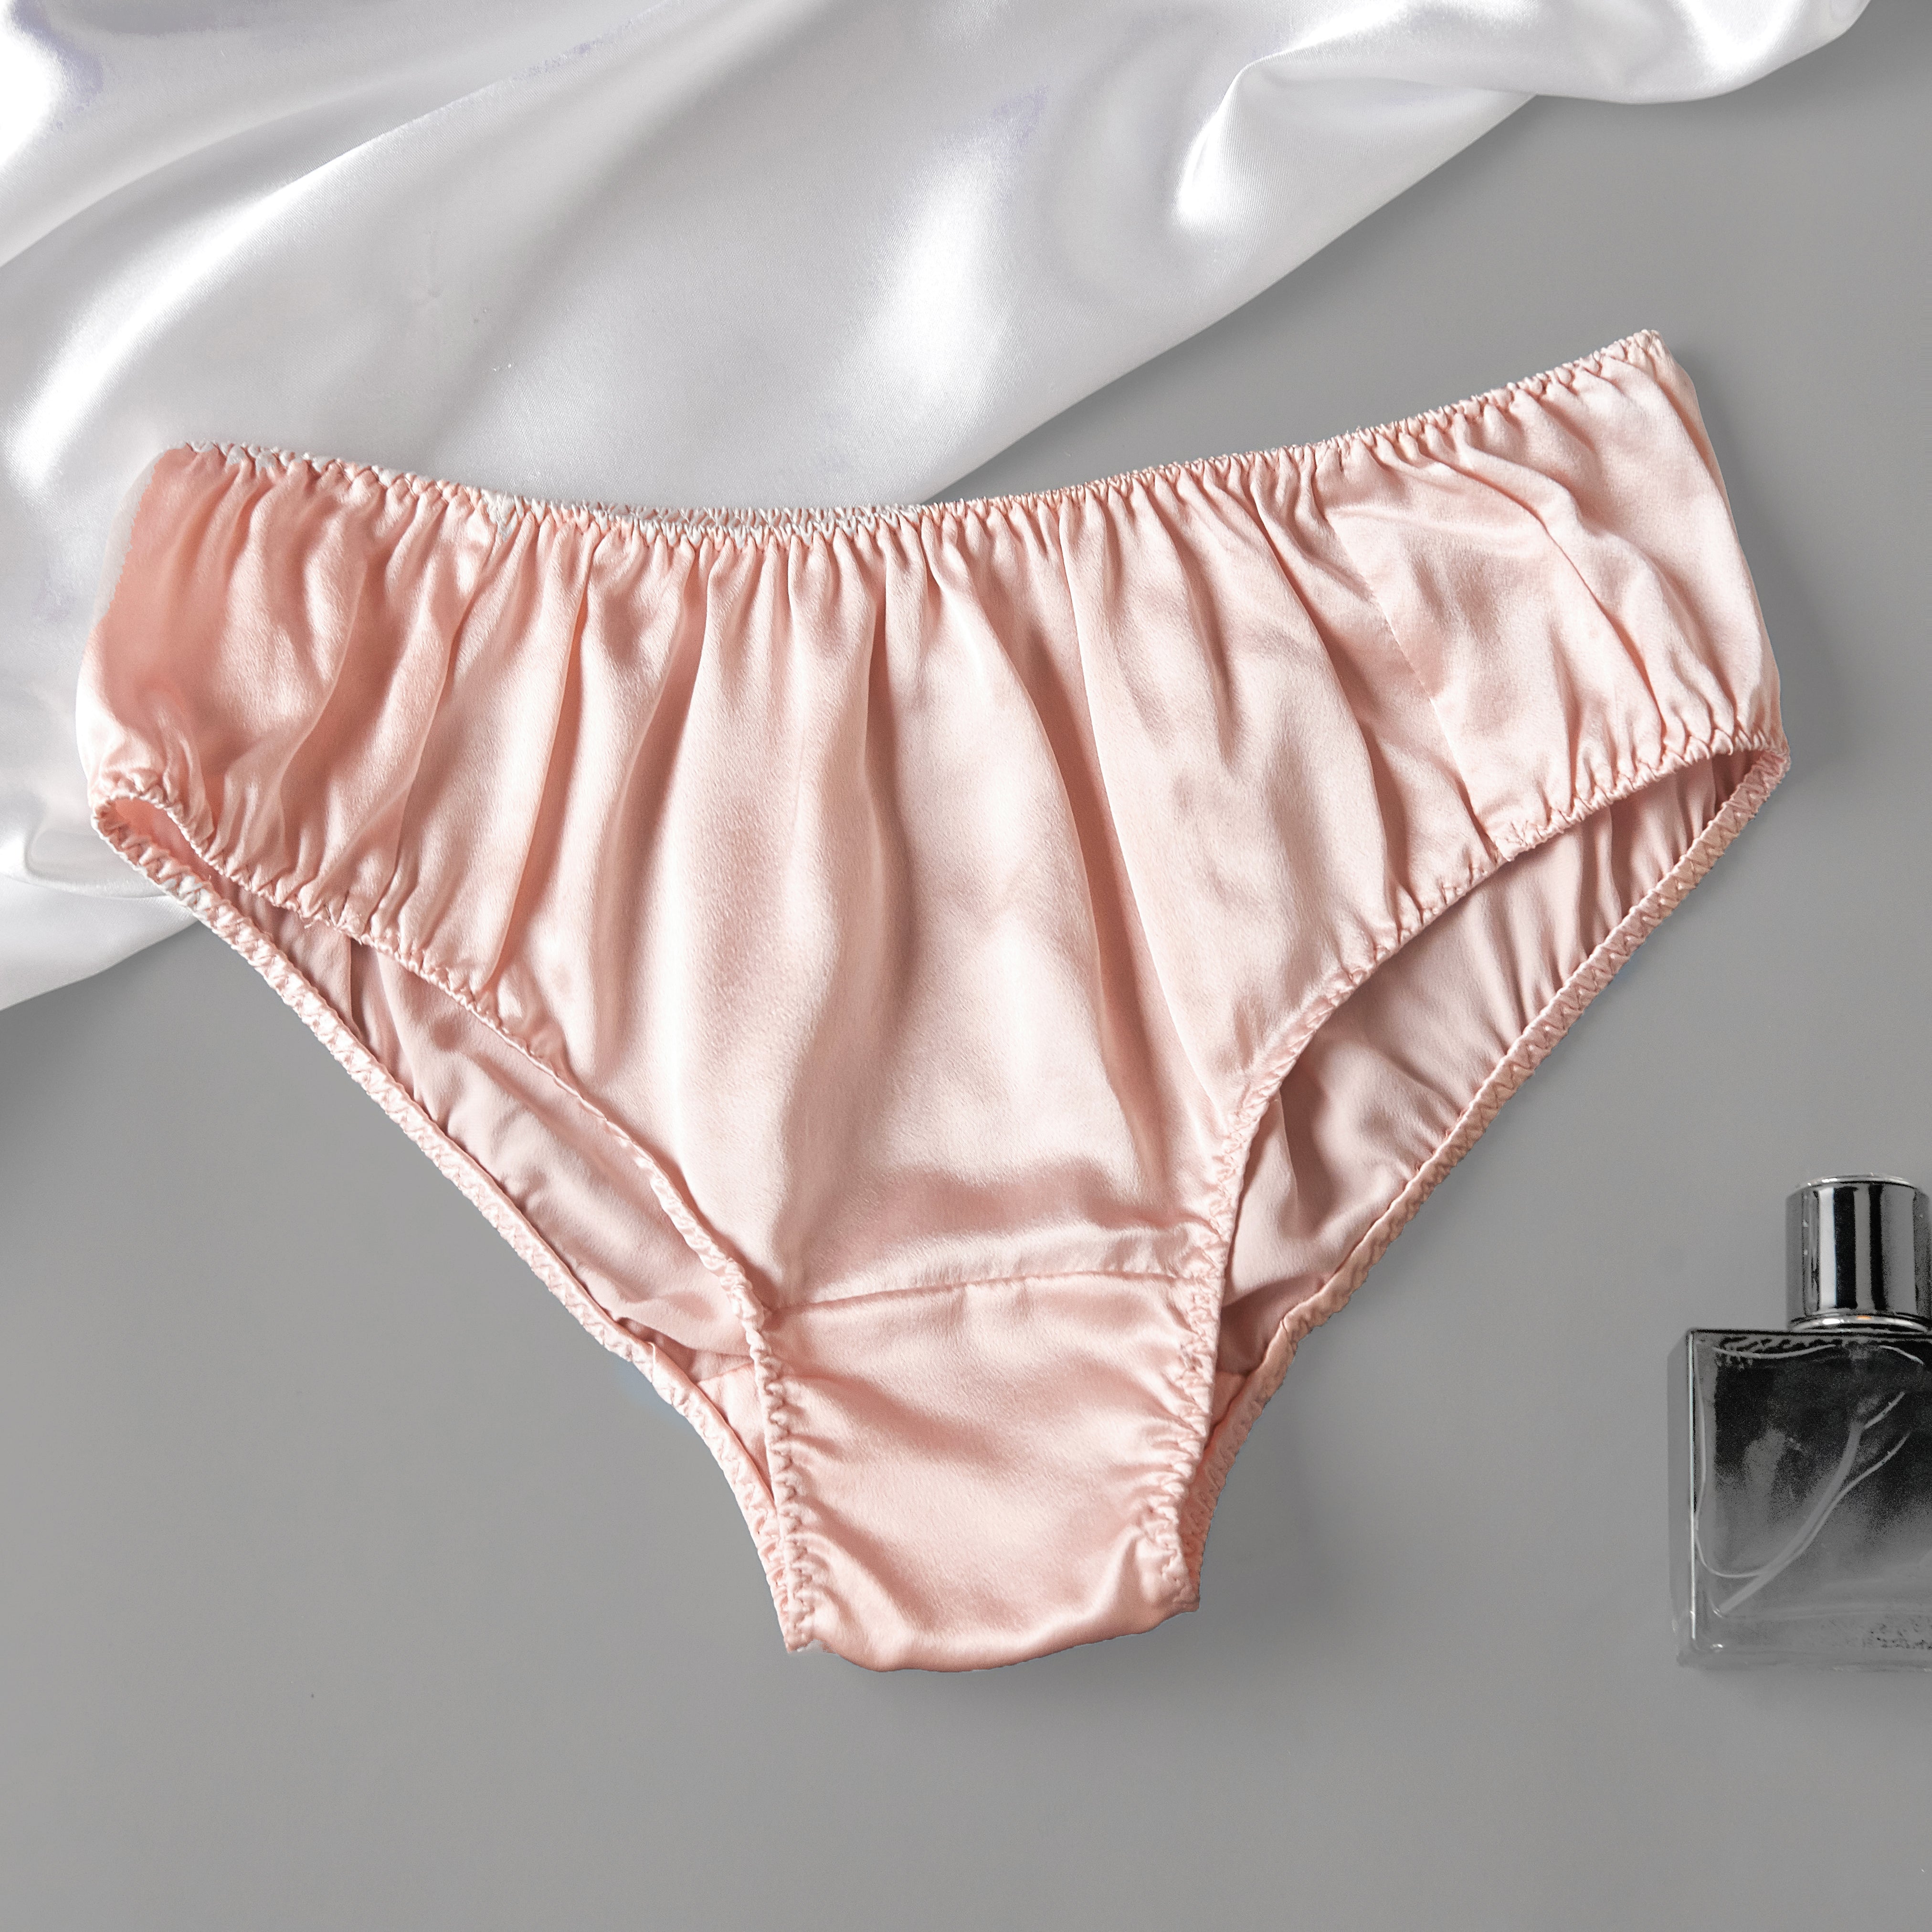 Moisture Wicking Cotton Panties-Women's Panties, Single Guide Wet